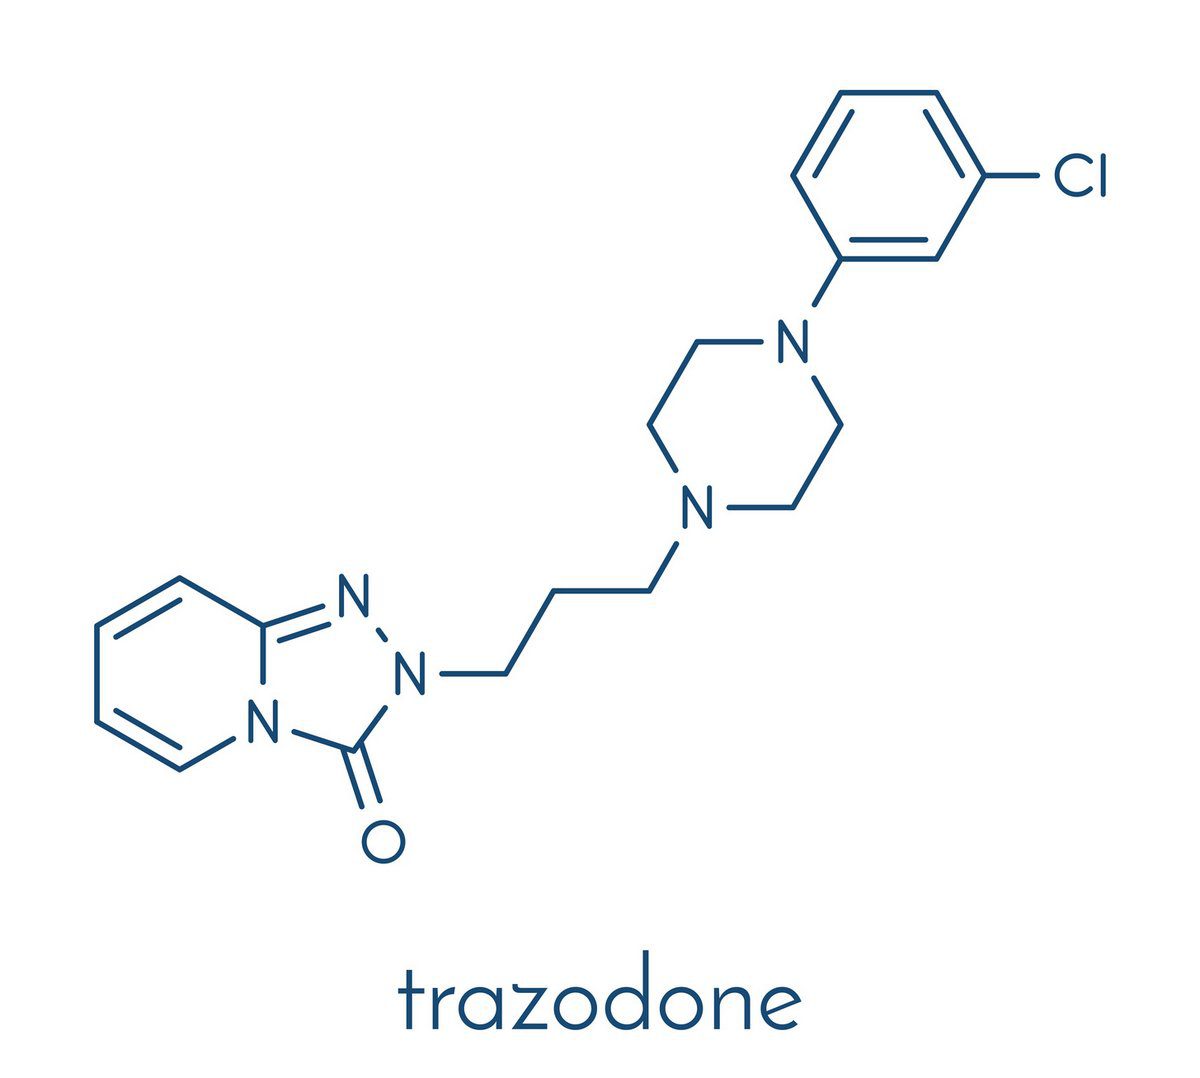 Trazodon / Trazodone (© molekuul.be - stock.adobe.com)